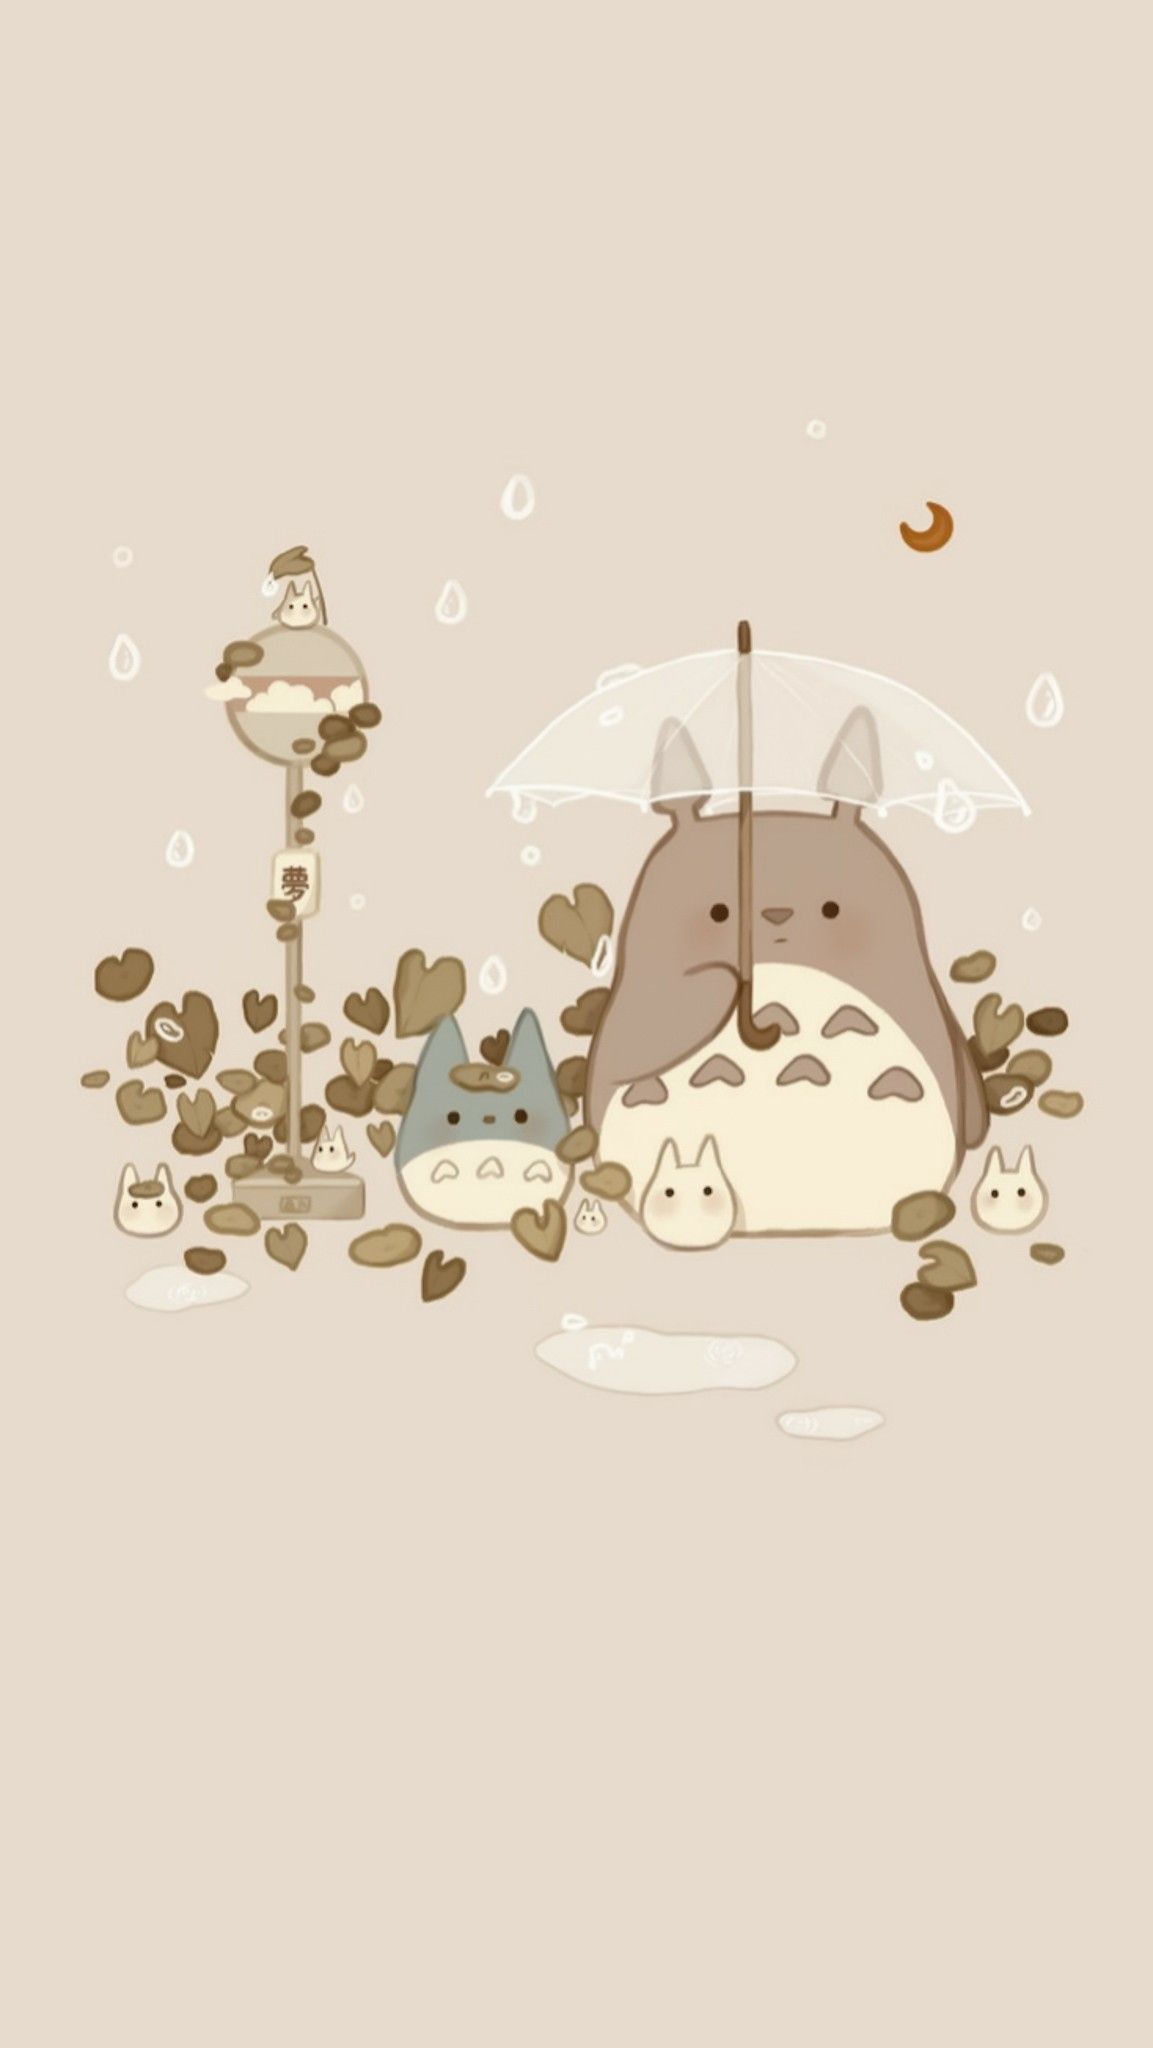 Kawaii Aesthetic Totoro Wallpaper Free Kawaii Aesthetic Totoro Background